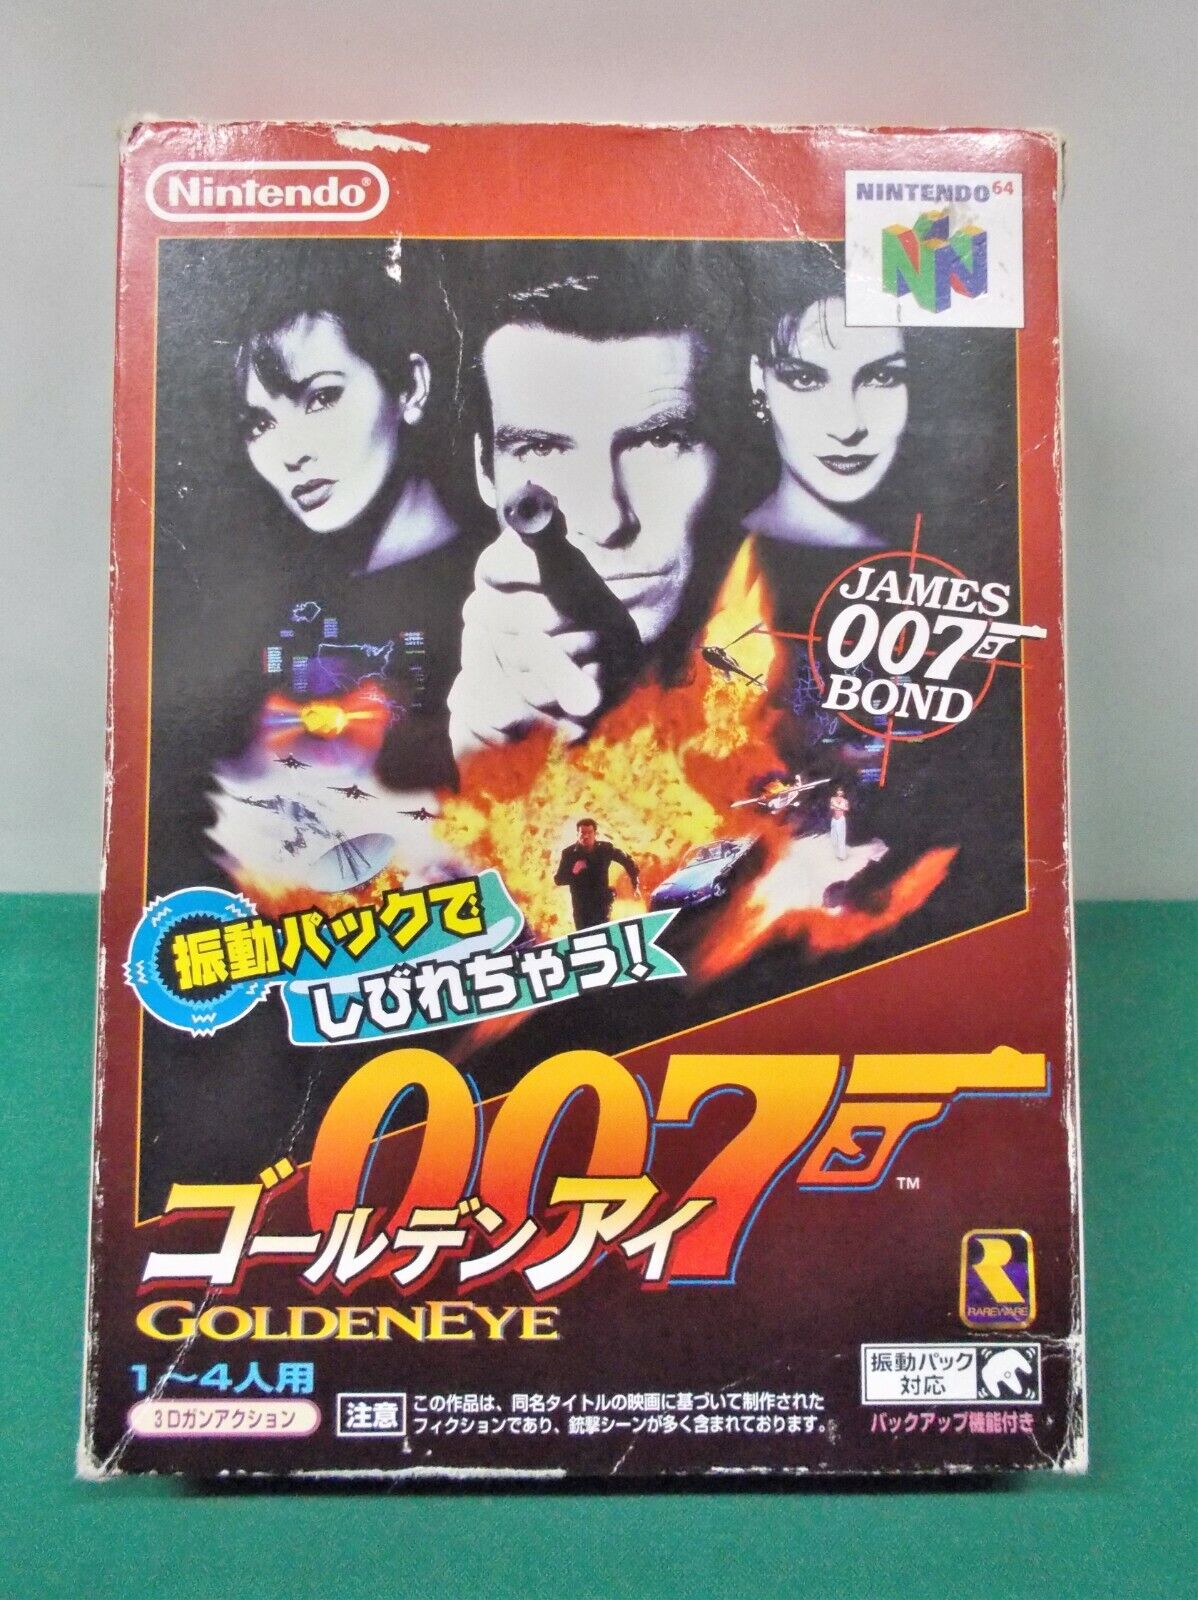 N64 -- Golden Eye 007 -- Nintendo 64, Japan. Game. 18374 | eBay